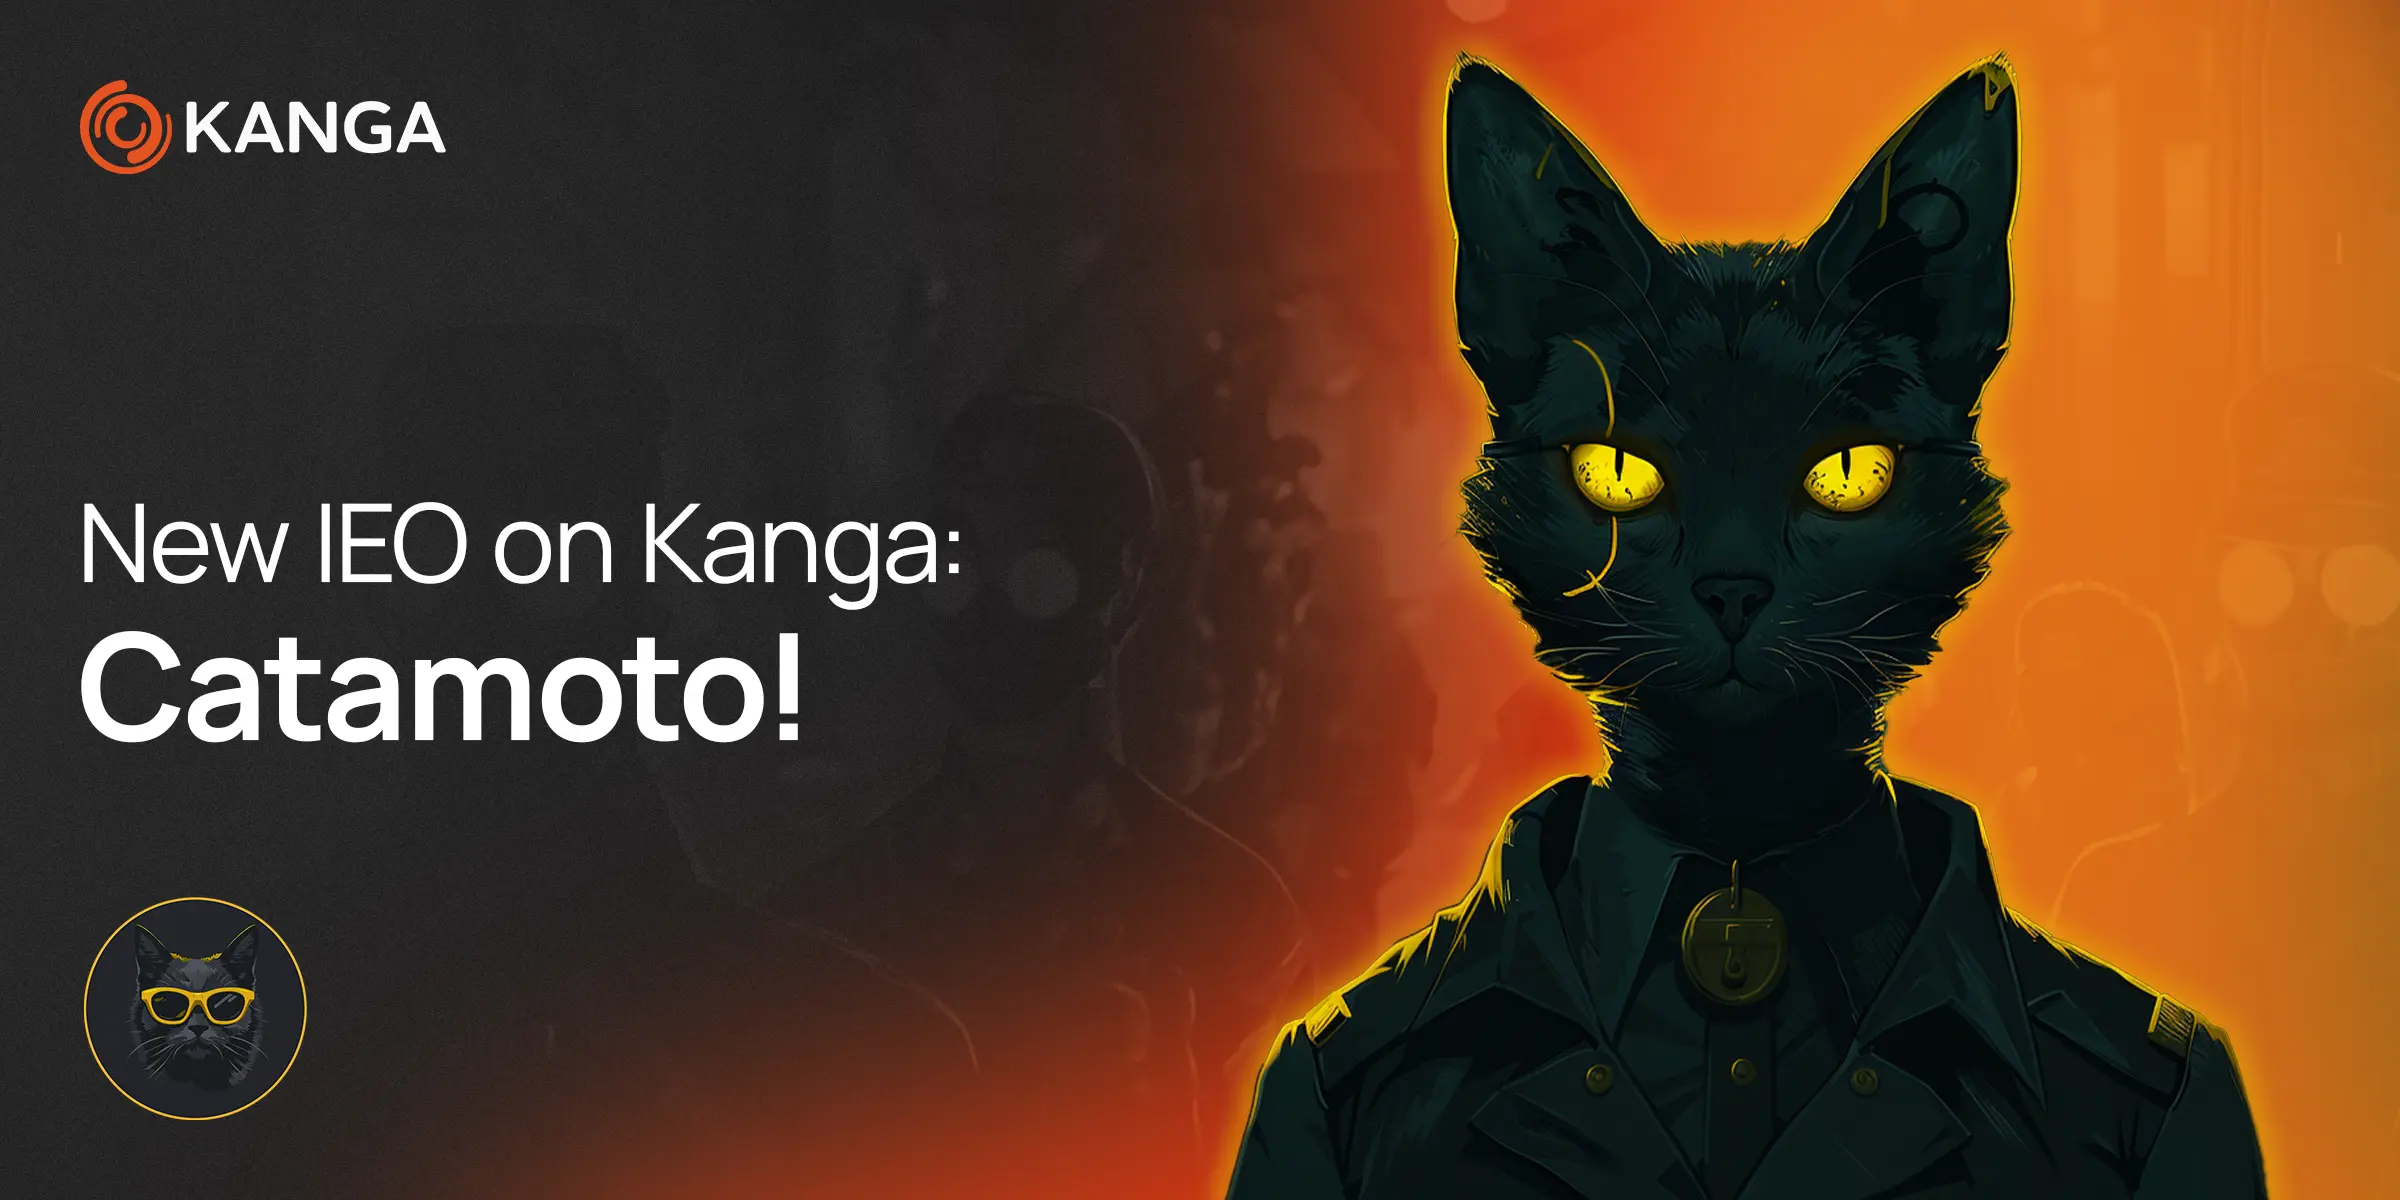 New IEO on Kanga: Catamoto!